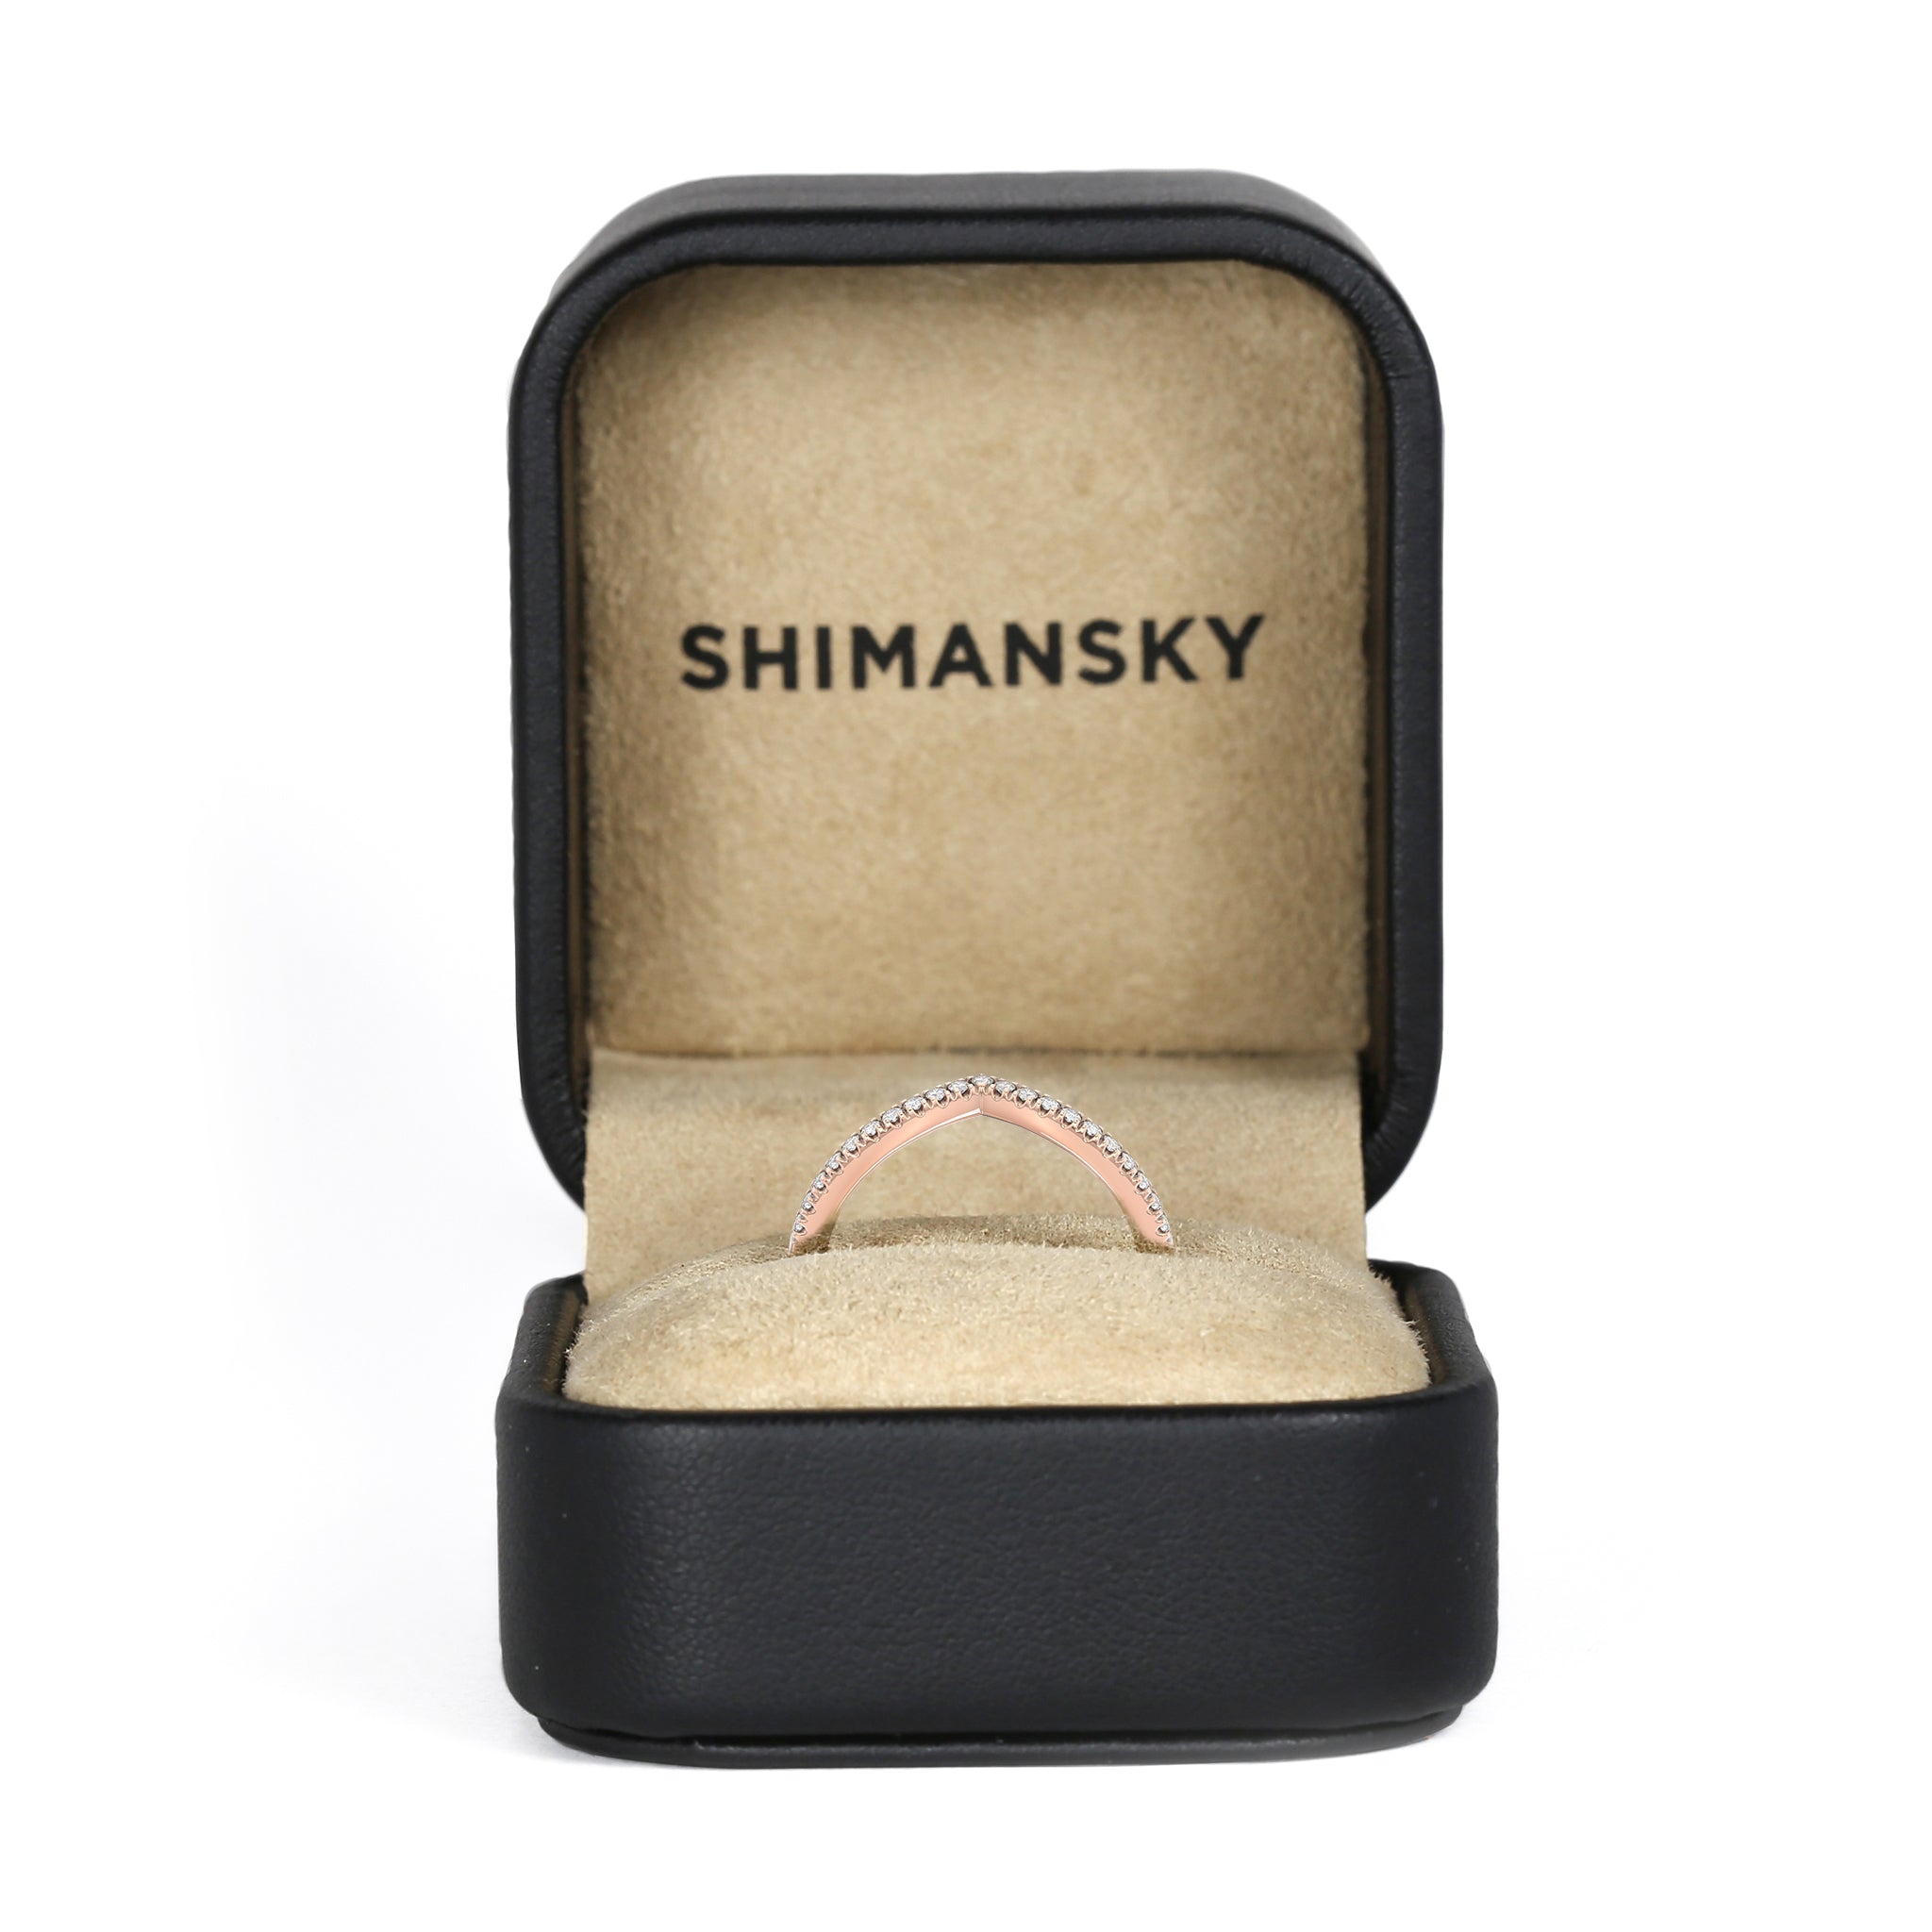 Shimansky - Wishbone Ladies Wedding Band Crafted in 18K Rose Gold